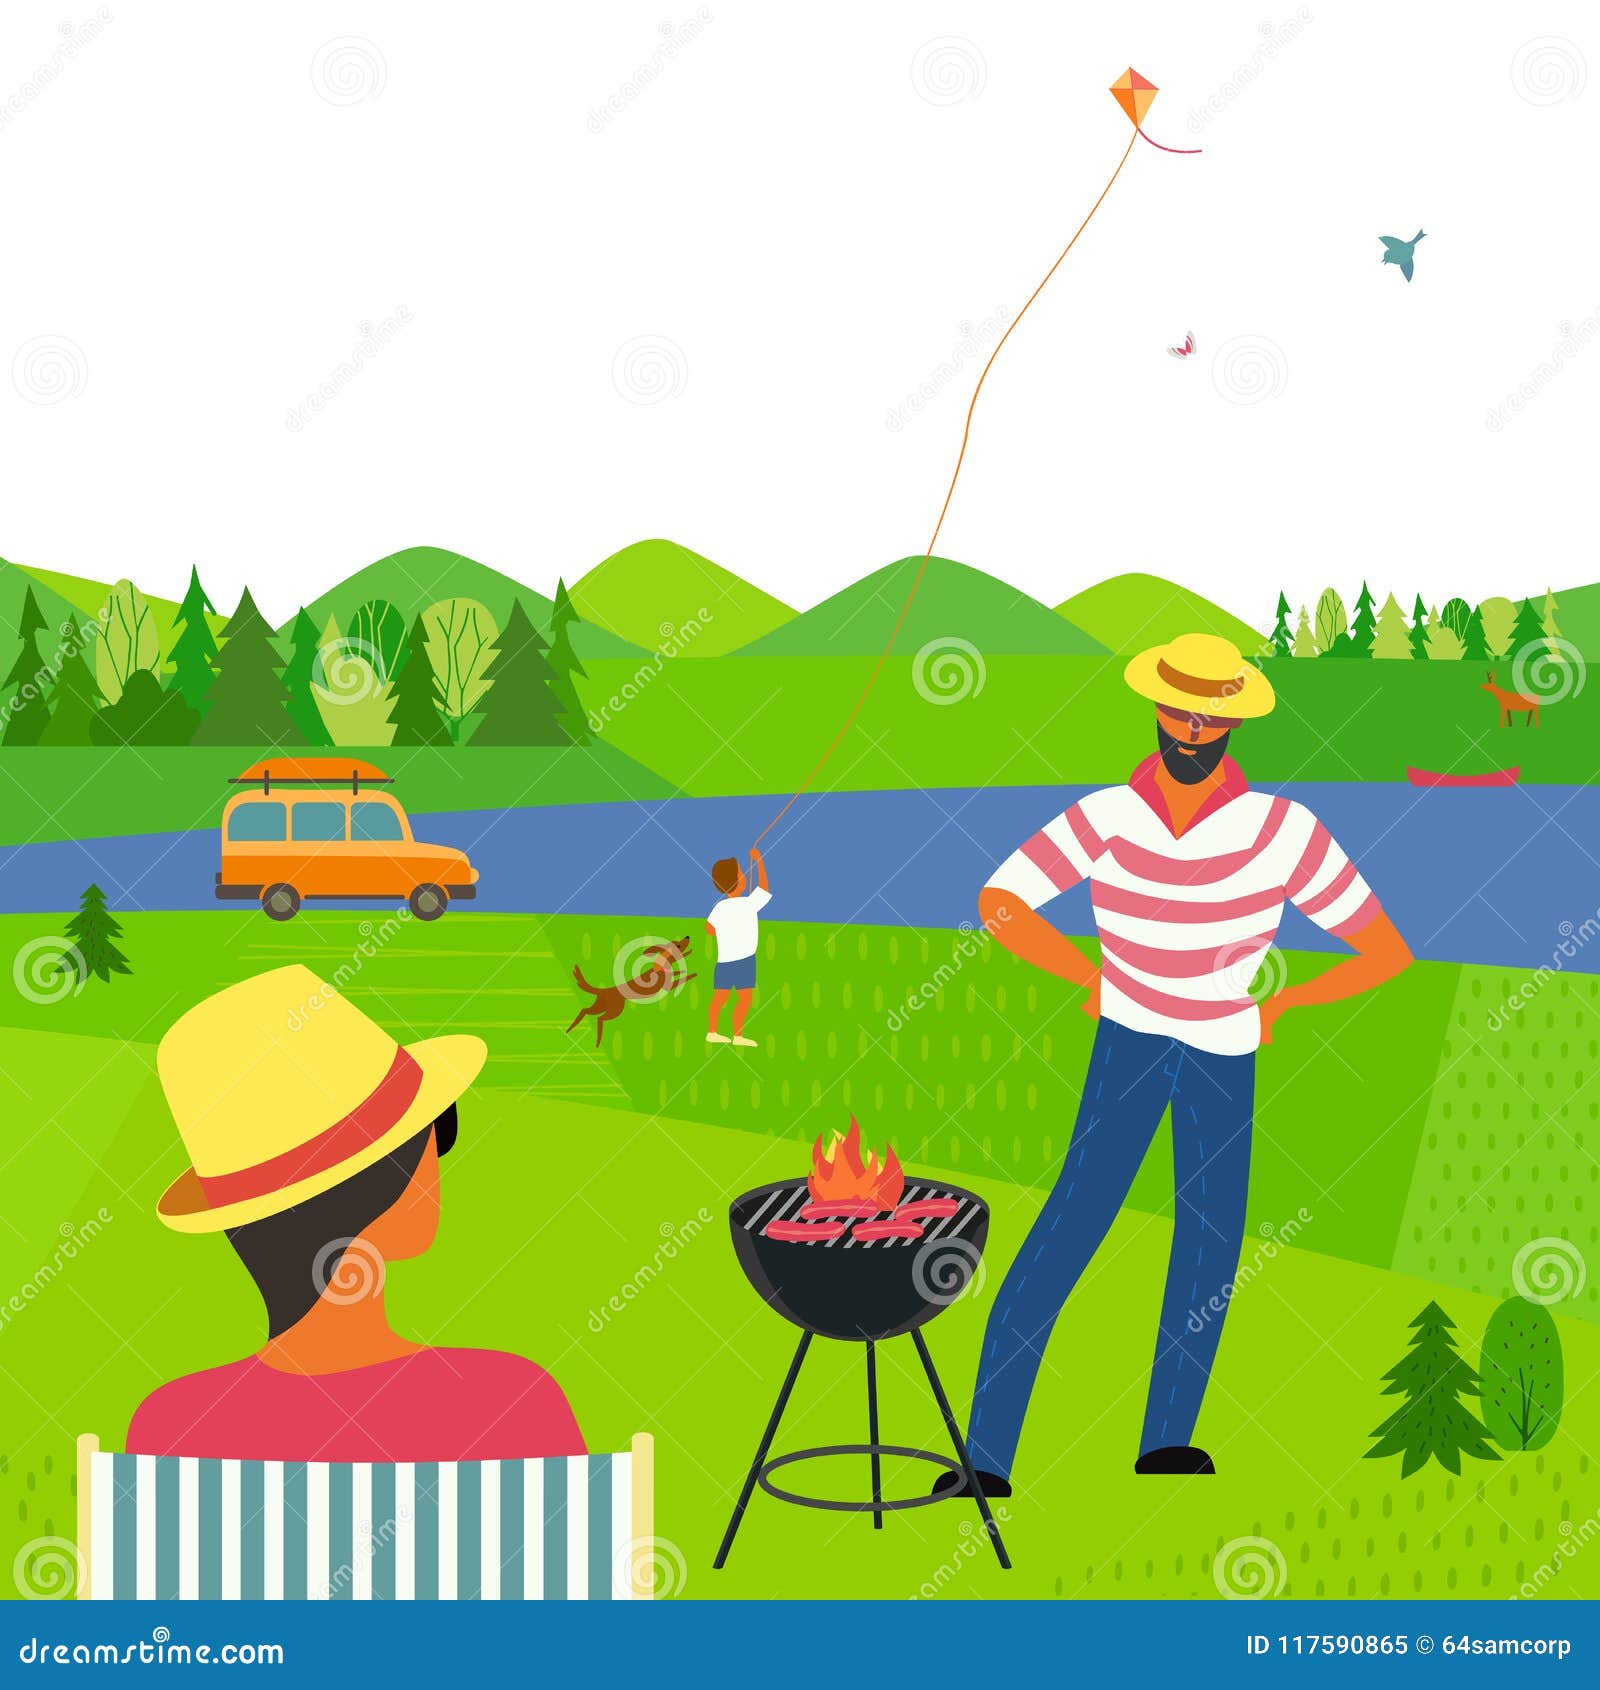 Summer family picnic stock illustration. Illustration of leisure - 117590865